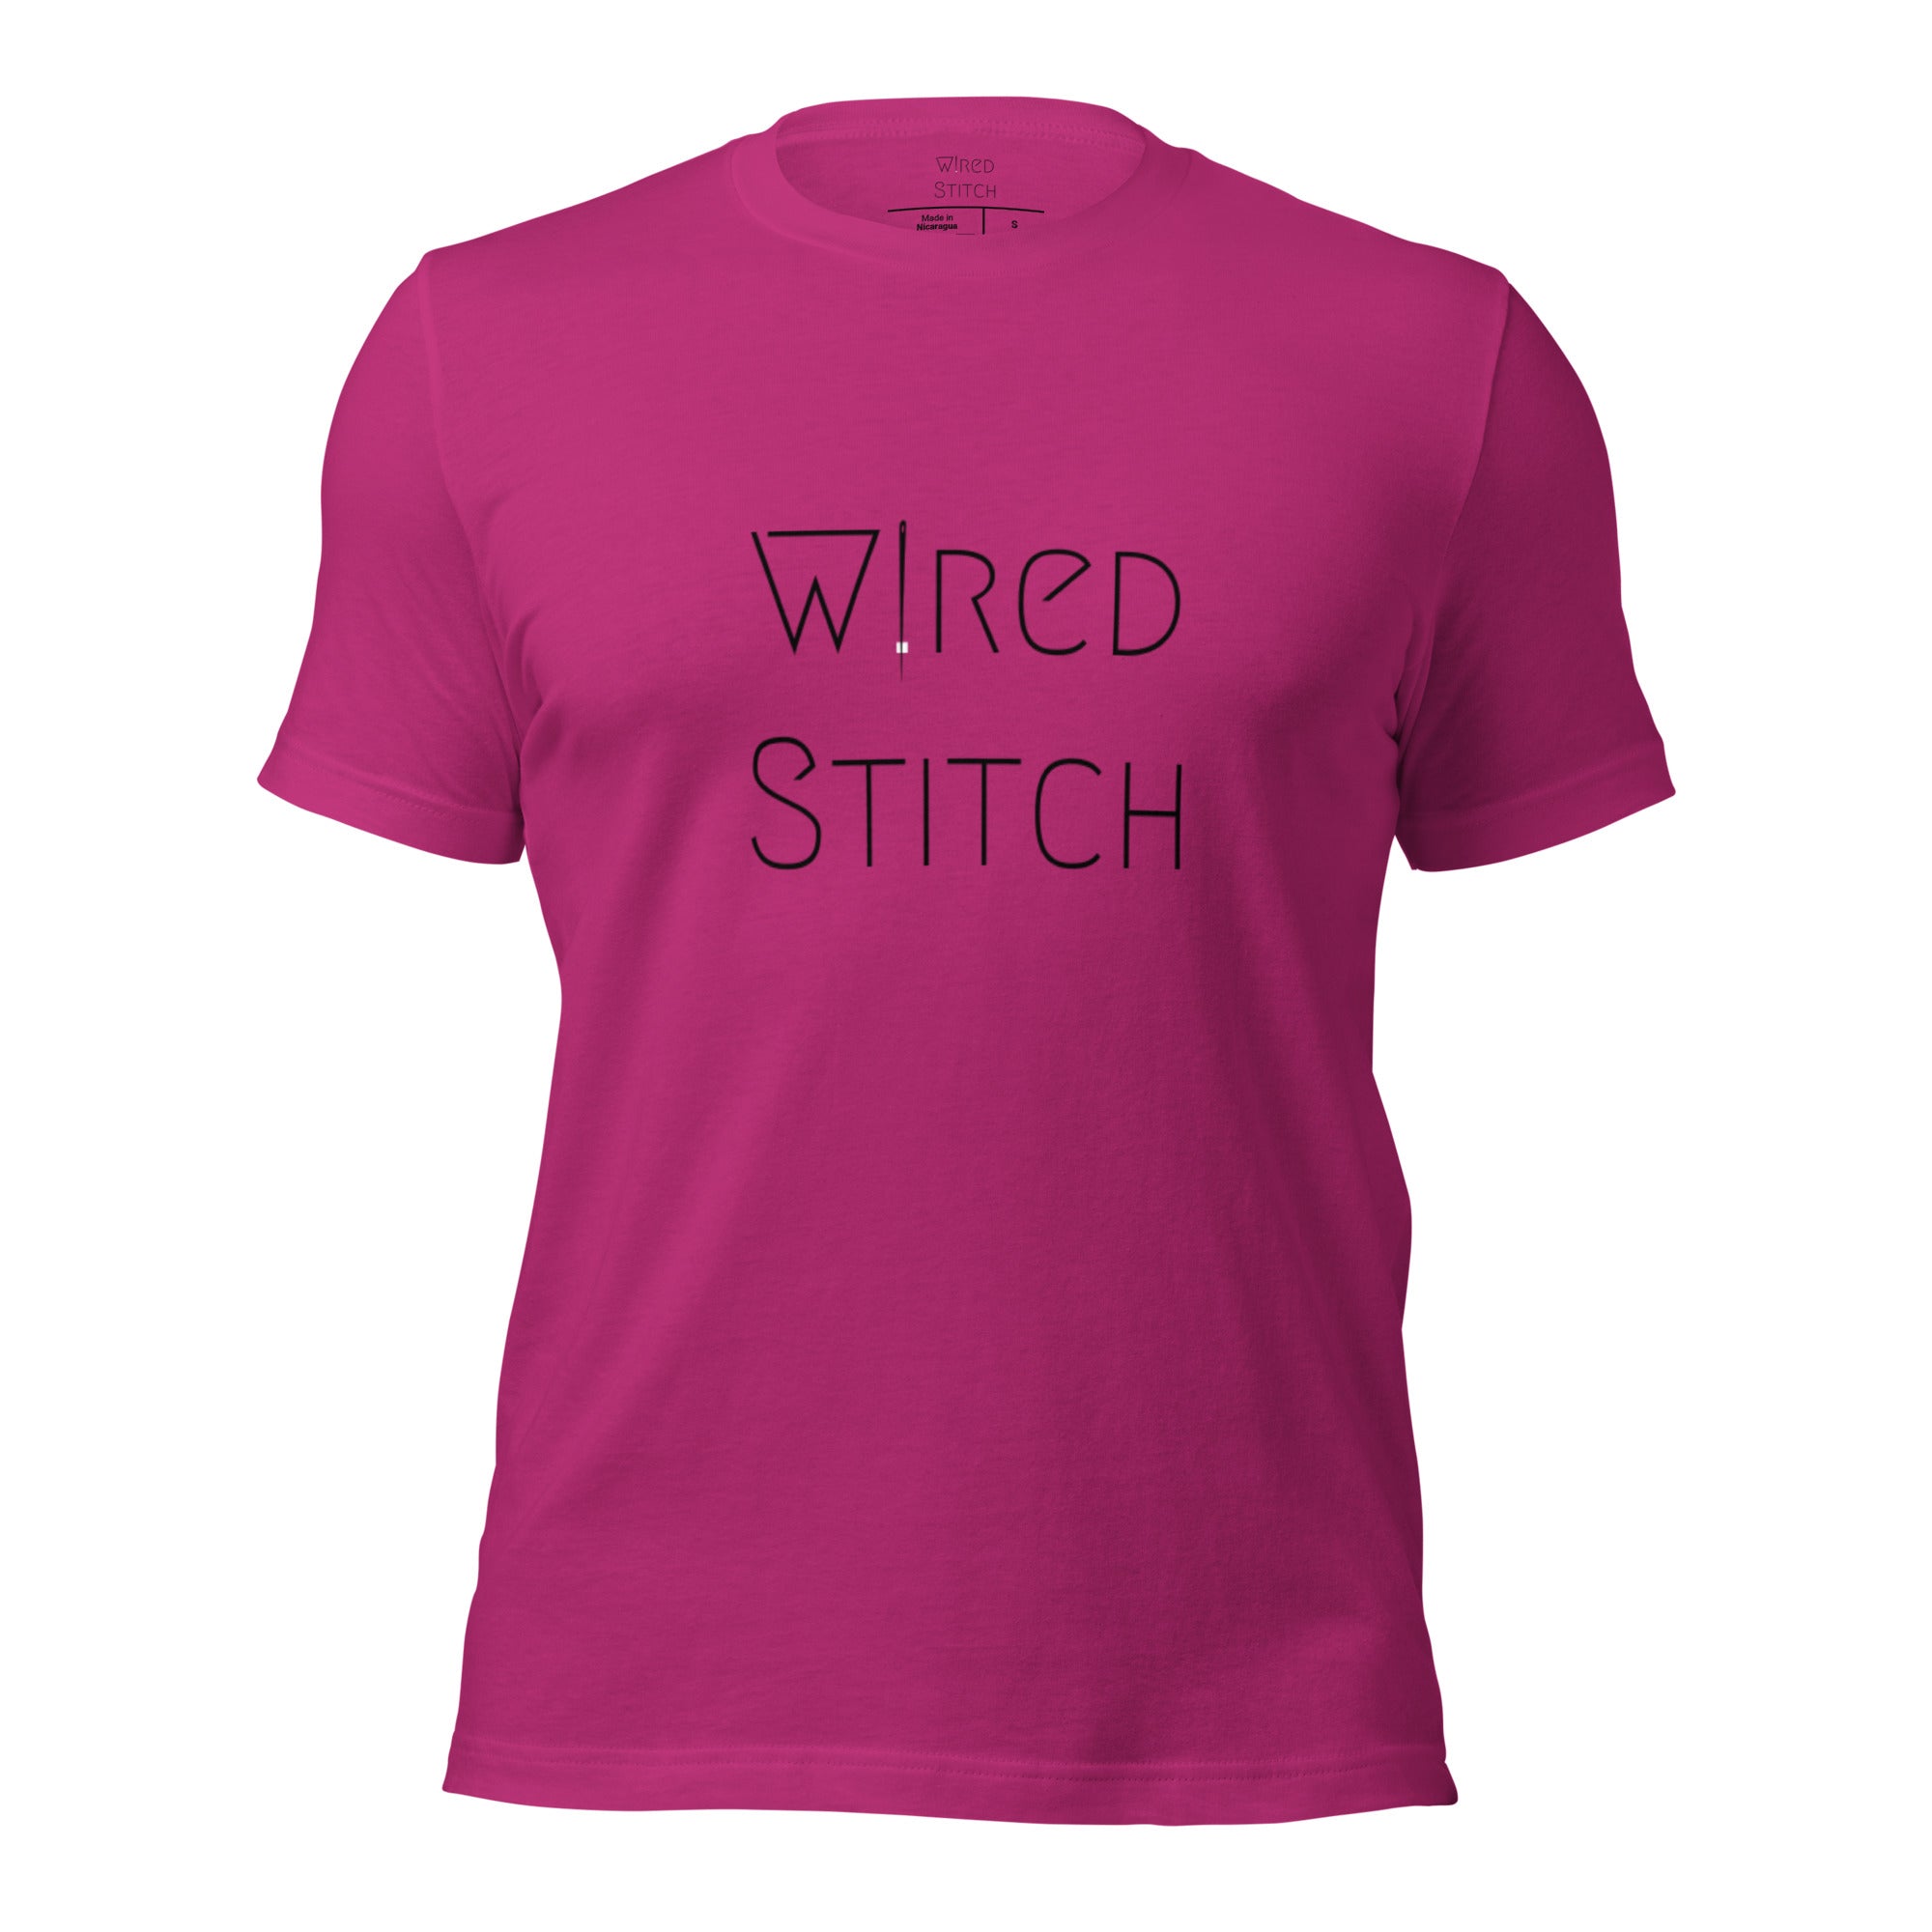 Wired Stitch t-shirt